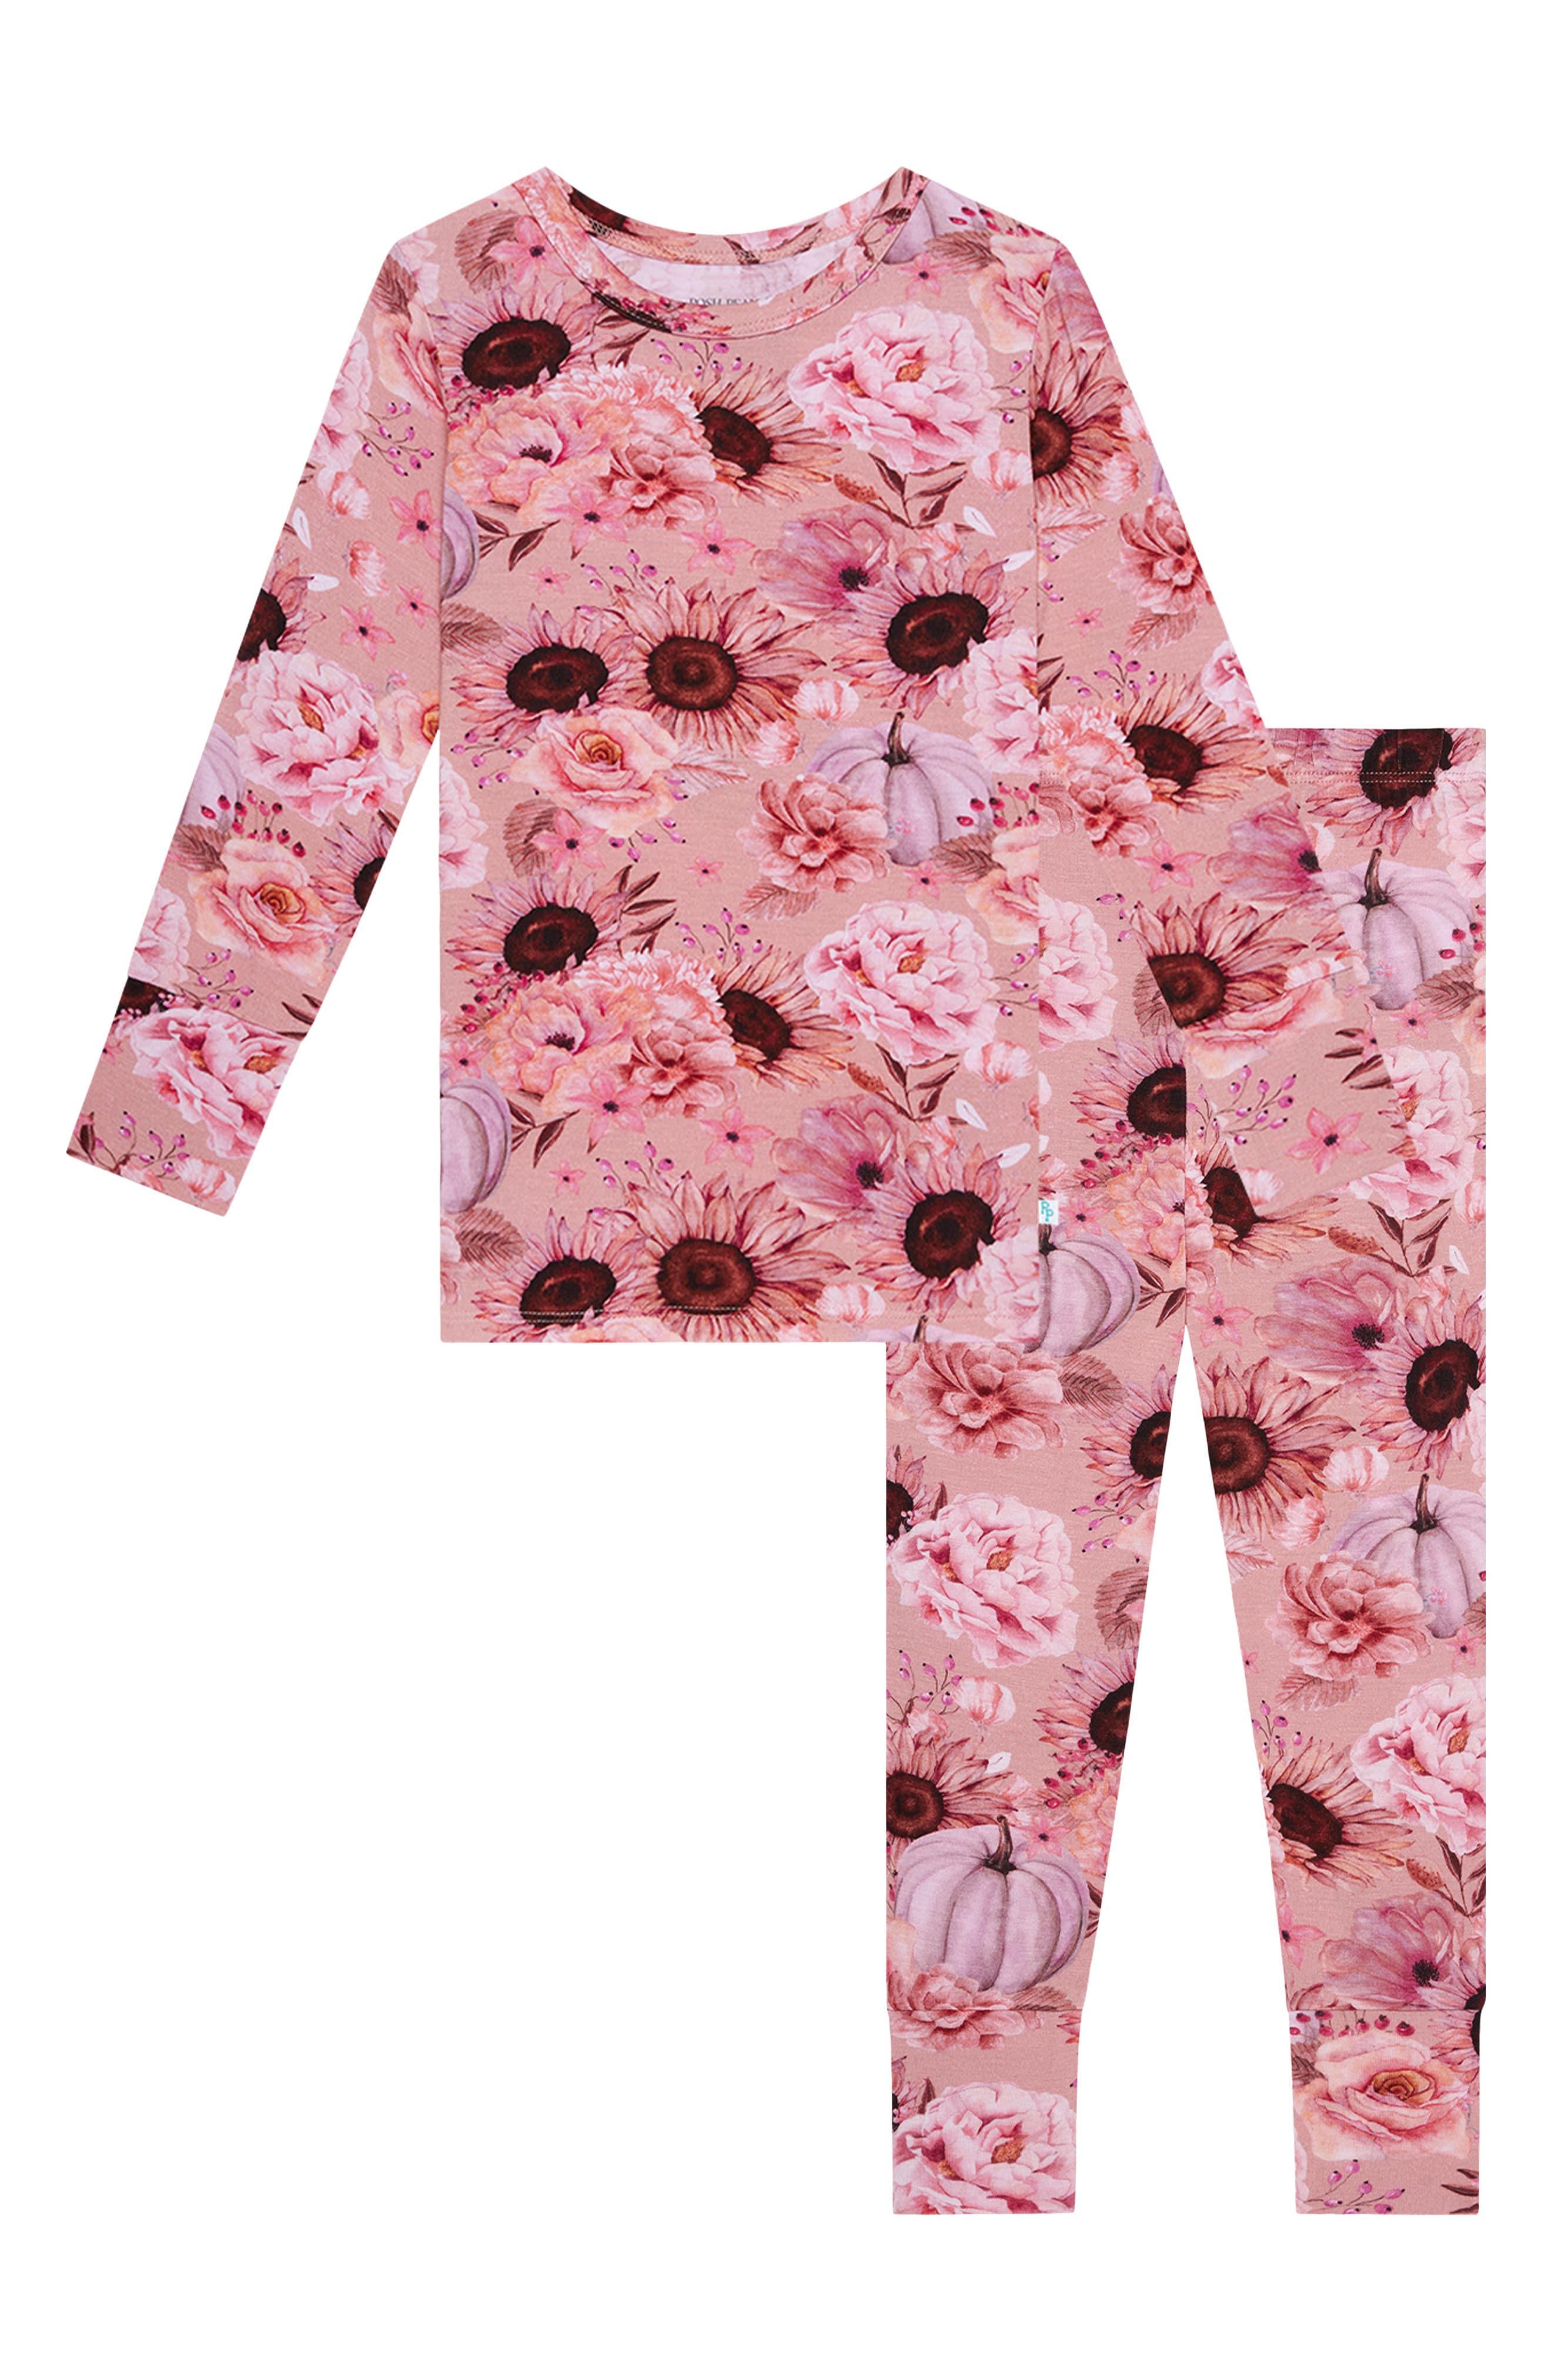 Personalised When I wake up Pjs Kids Pyjamas Childrens Unicorn Gifts Nightwear 2 